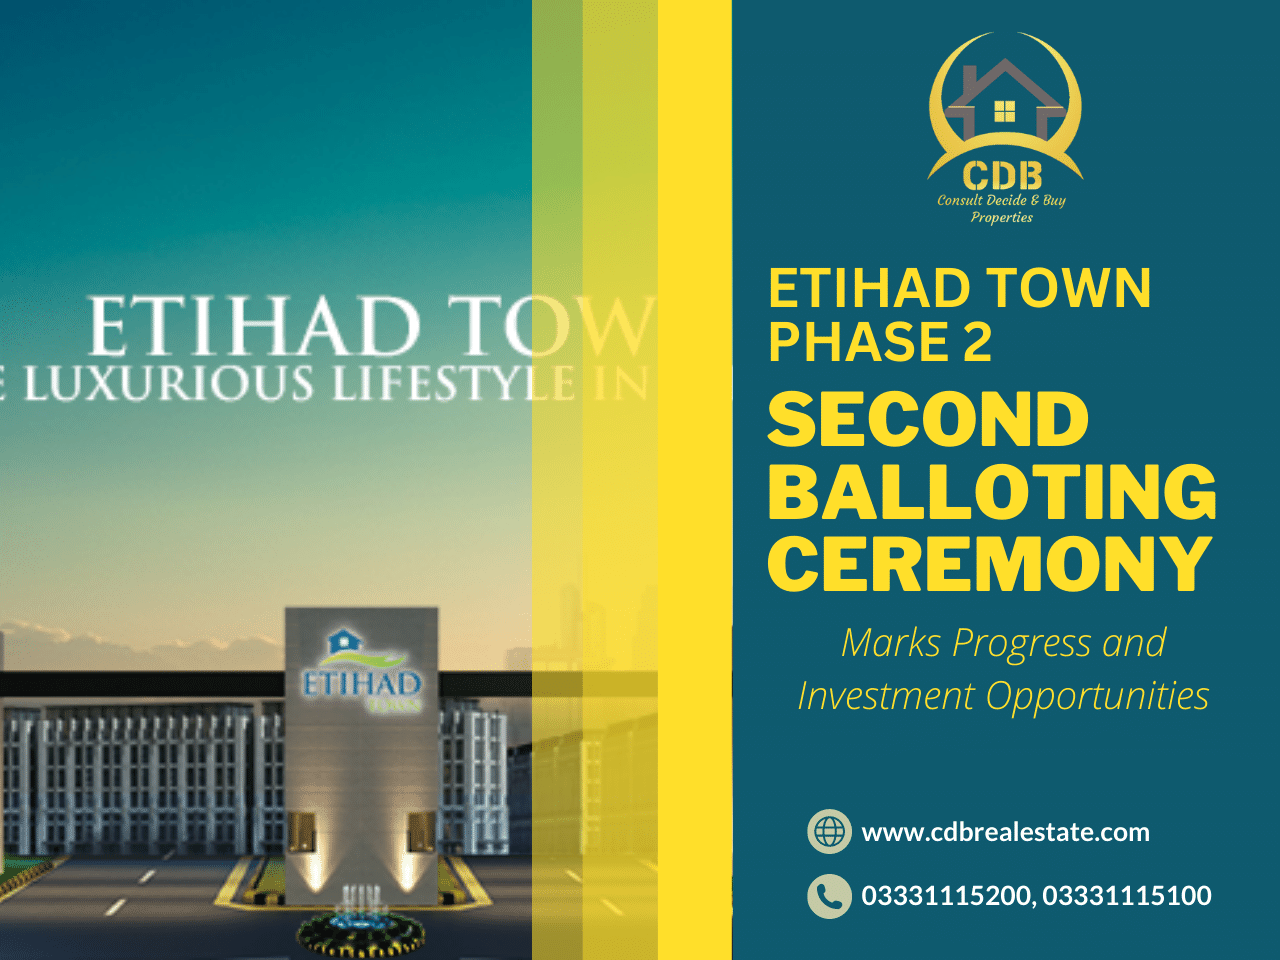 Etihad Town Phase 2 Second Balloting